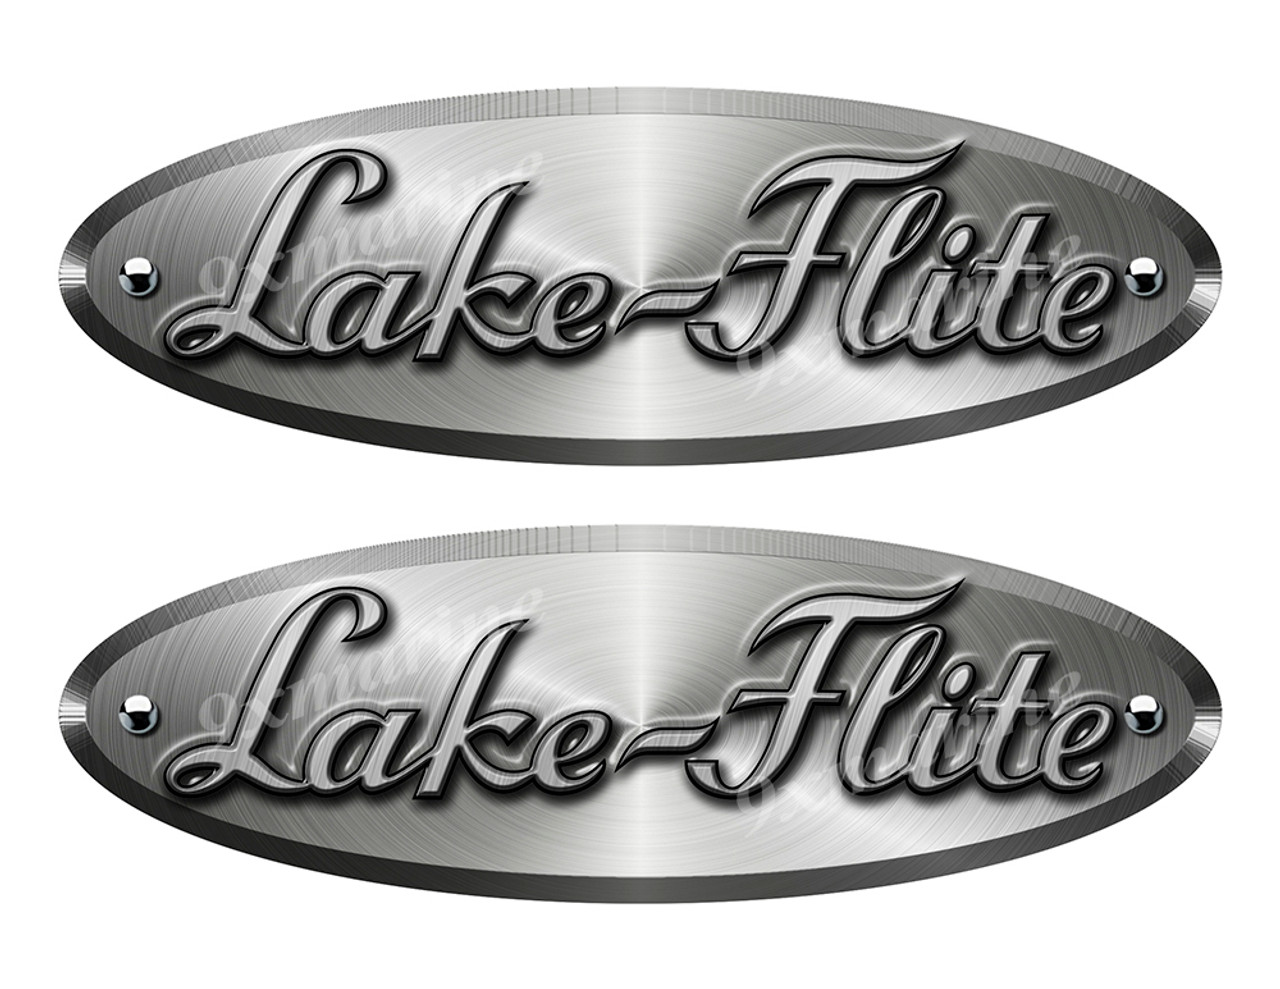 Lake Flit Remastered Stickers. Brushed Metal Style - 10" long